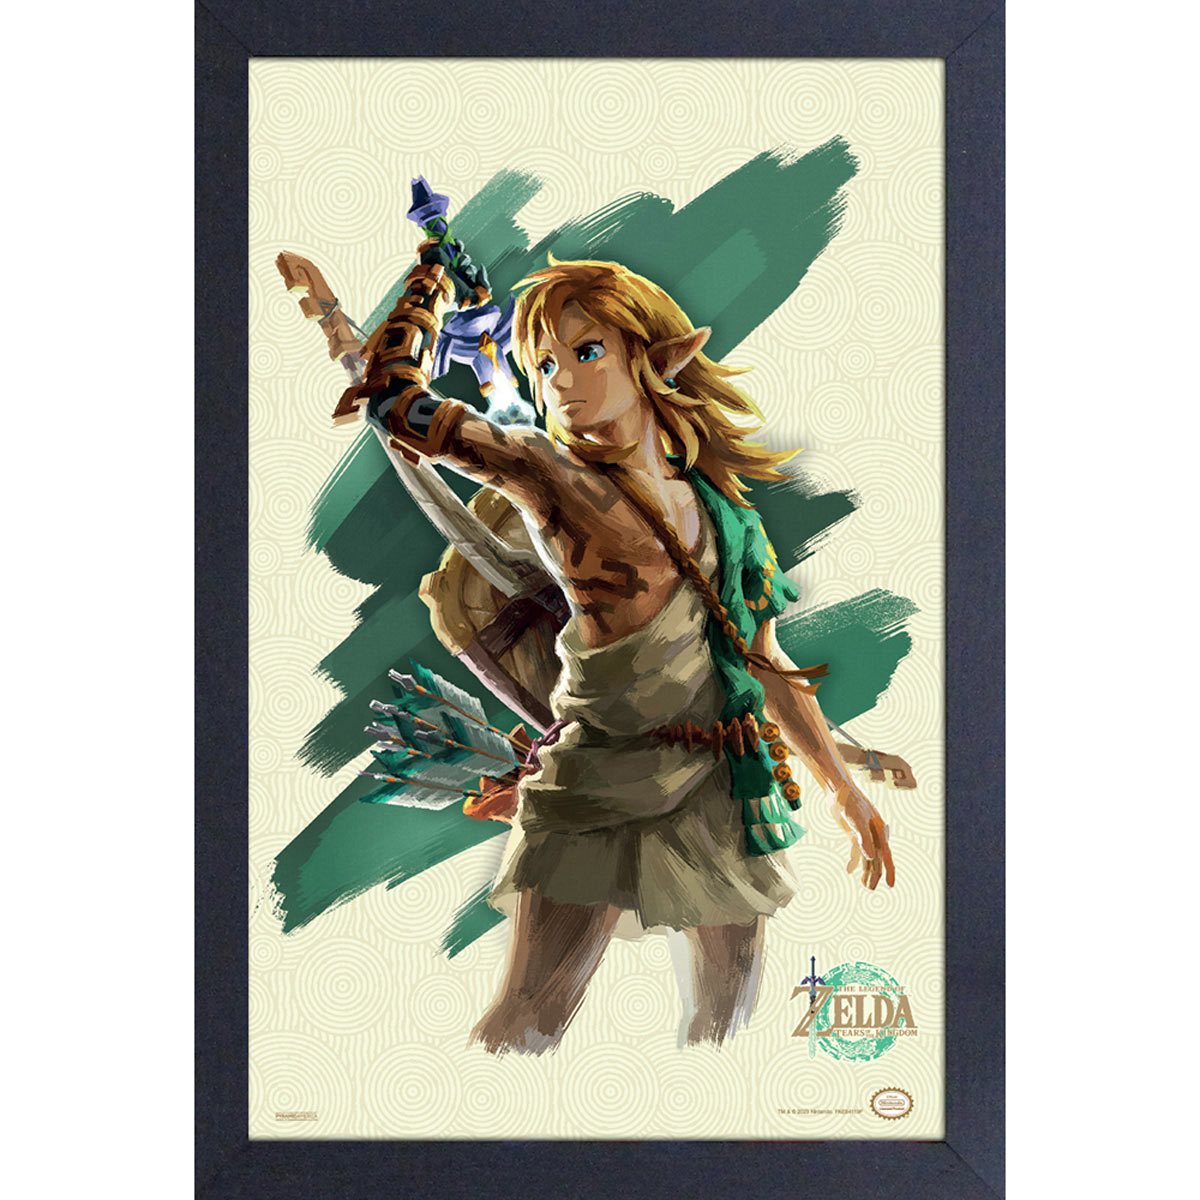 New Artwork Of Link In 'The Legend Of Zelda: Tears of the Kingdom